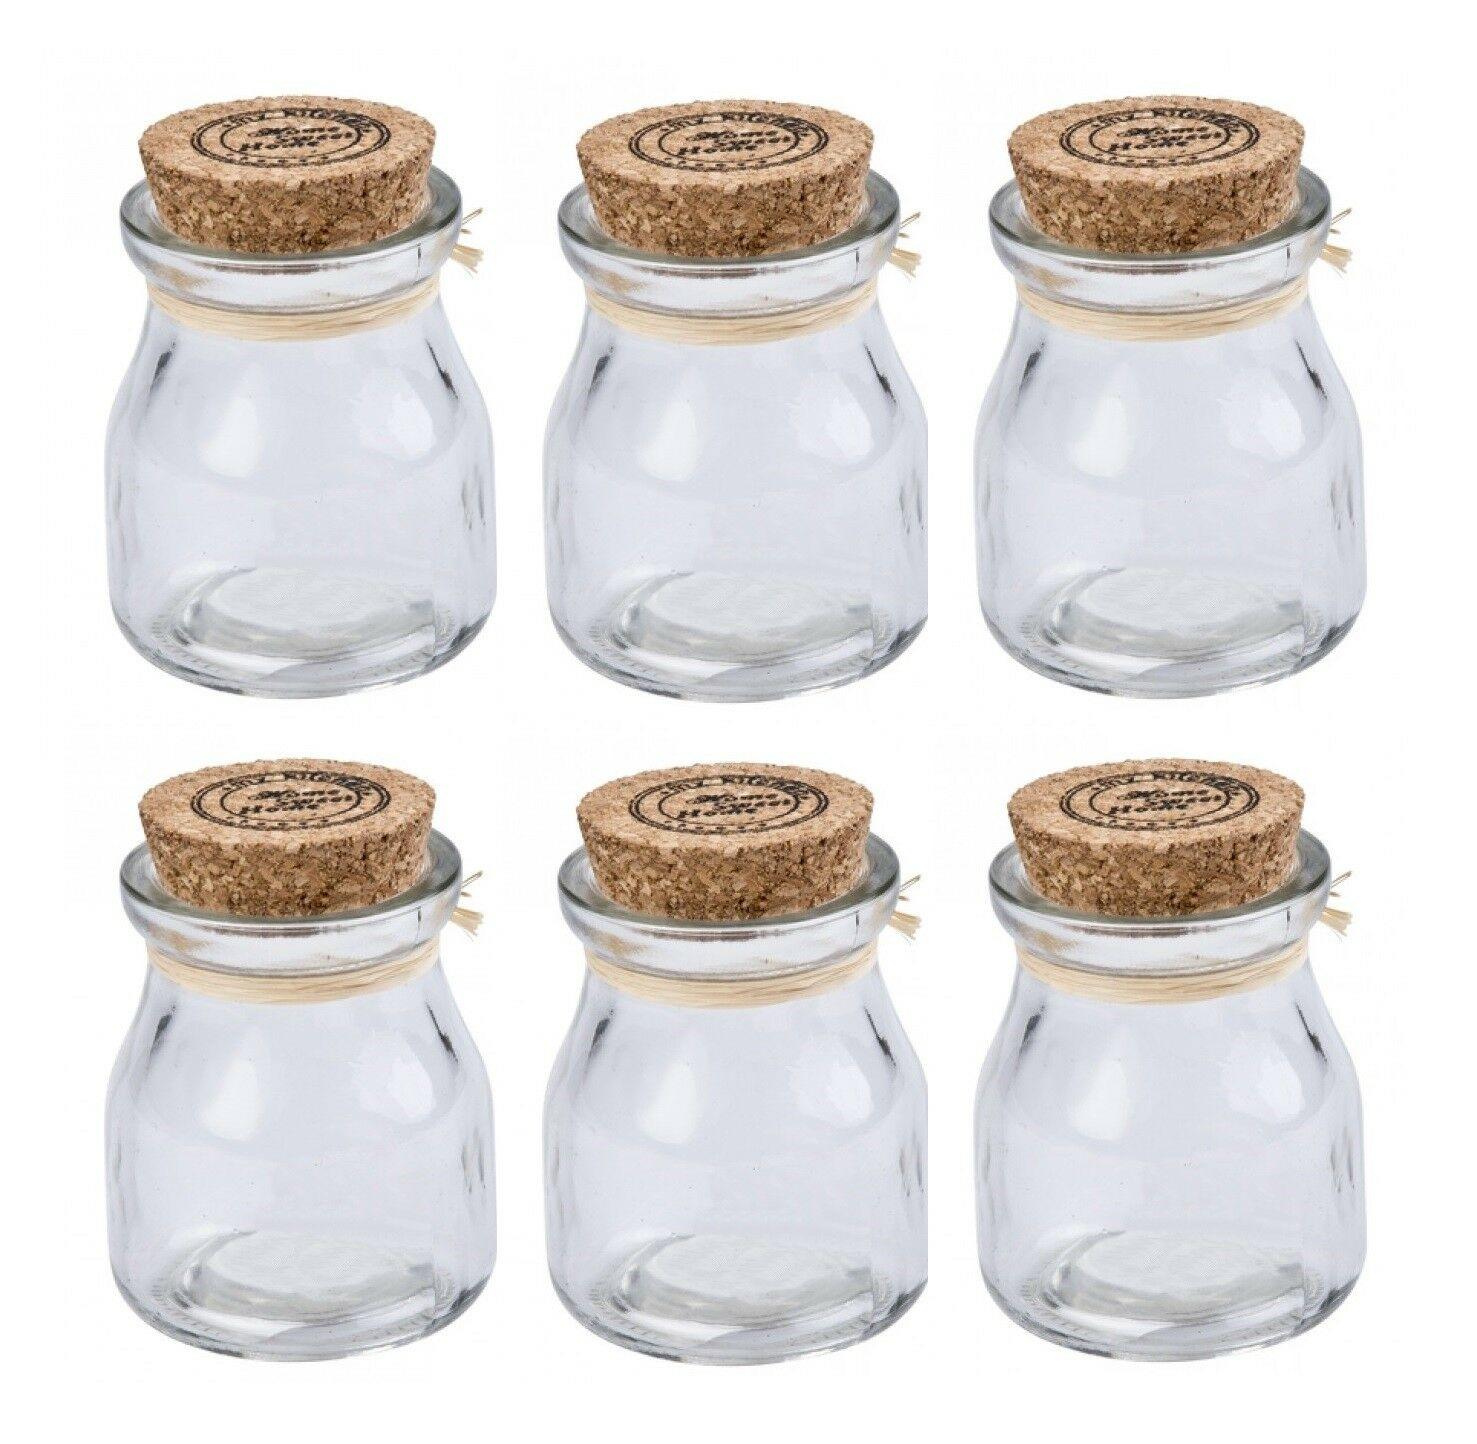 Cork tops for jars